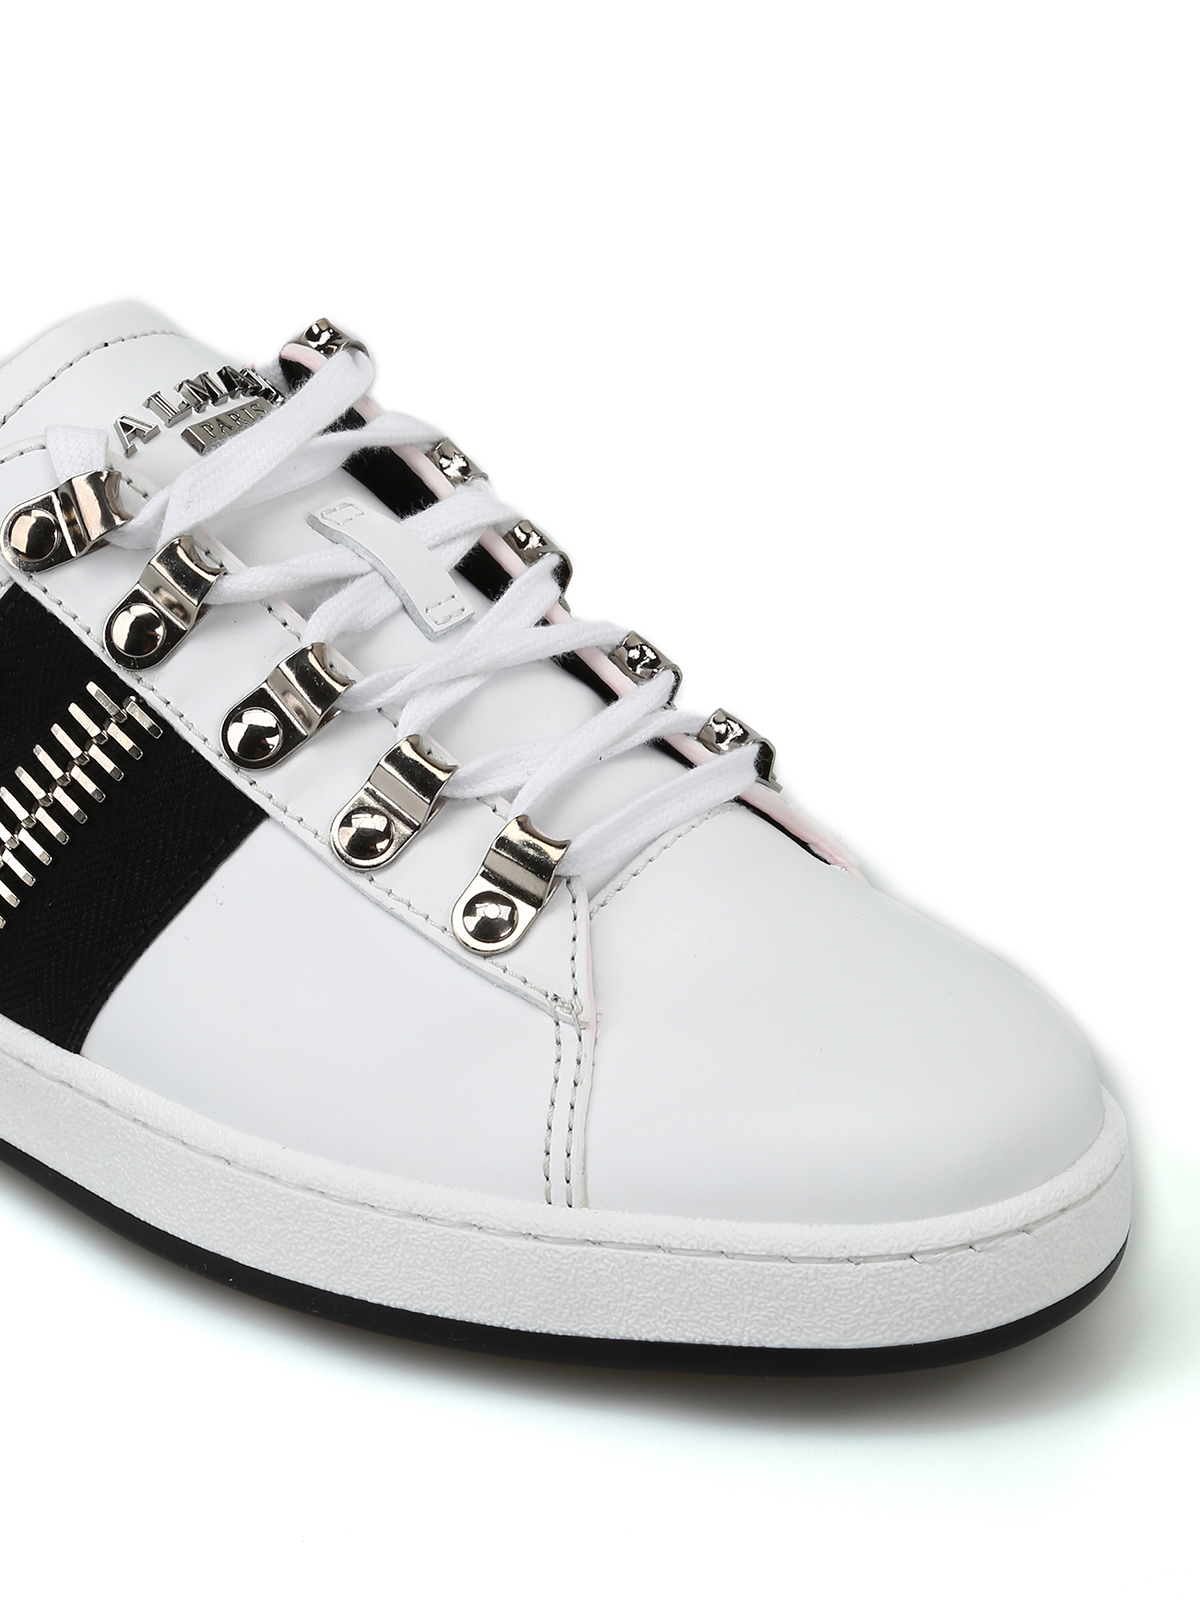 balmain white shoes